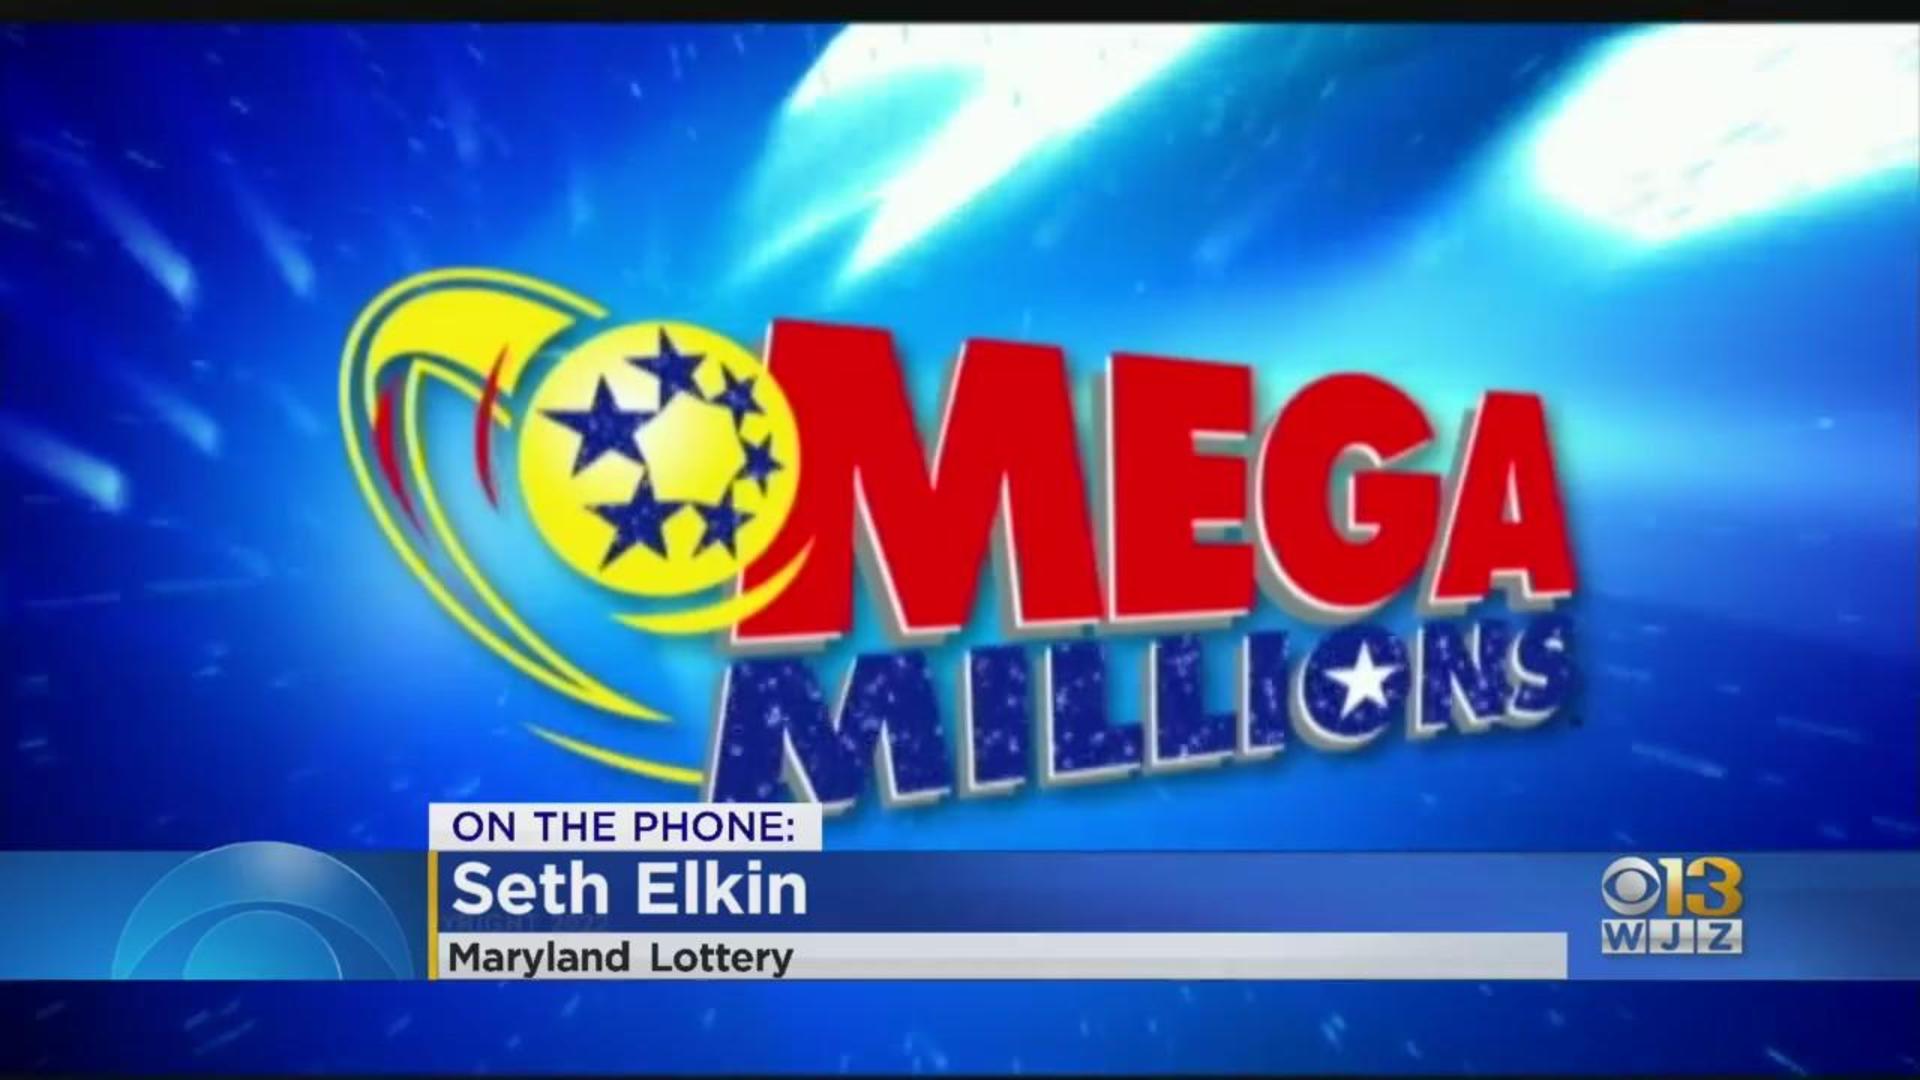 Record-setting Mega Millions jackpot brings out the social media salt